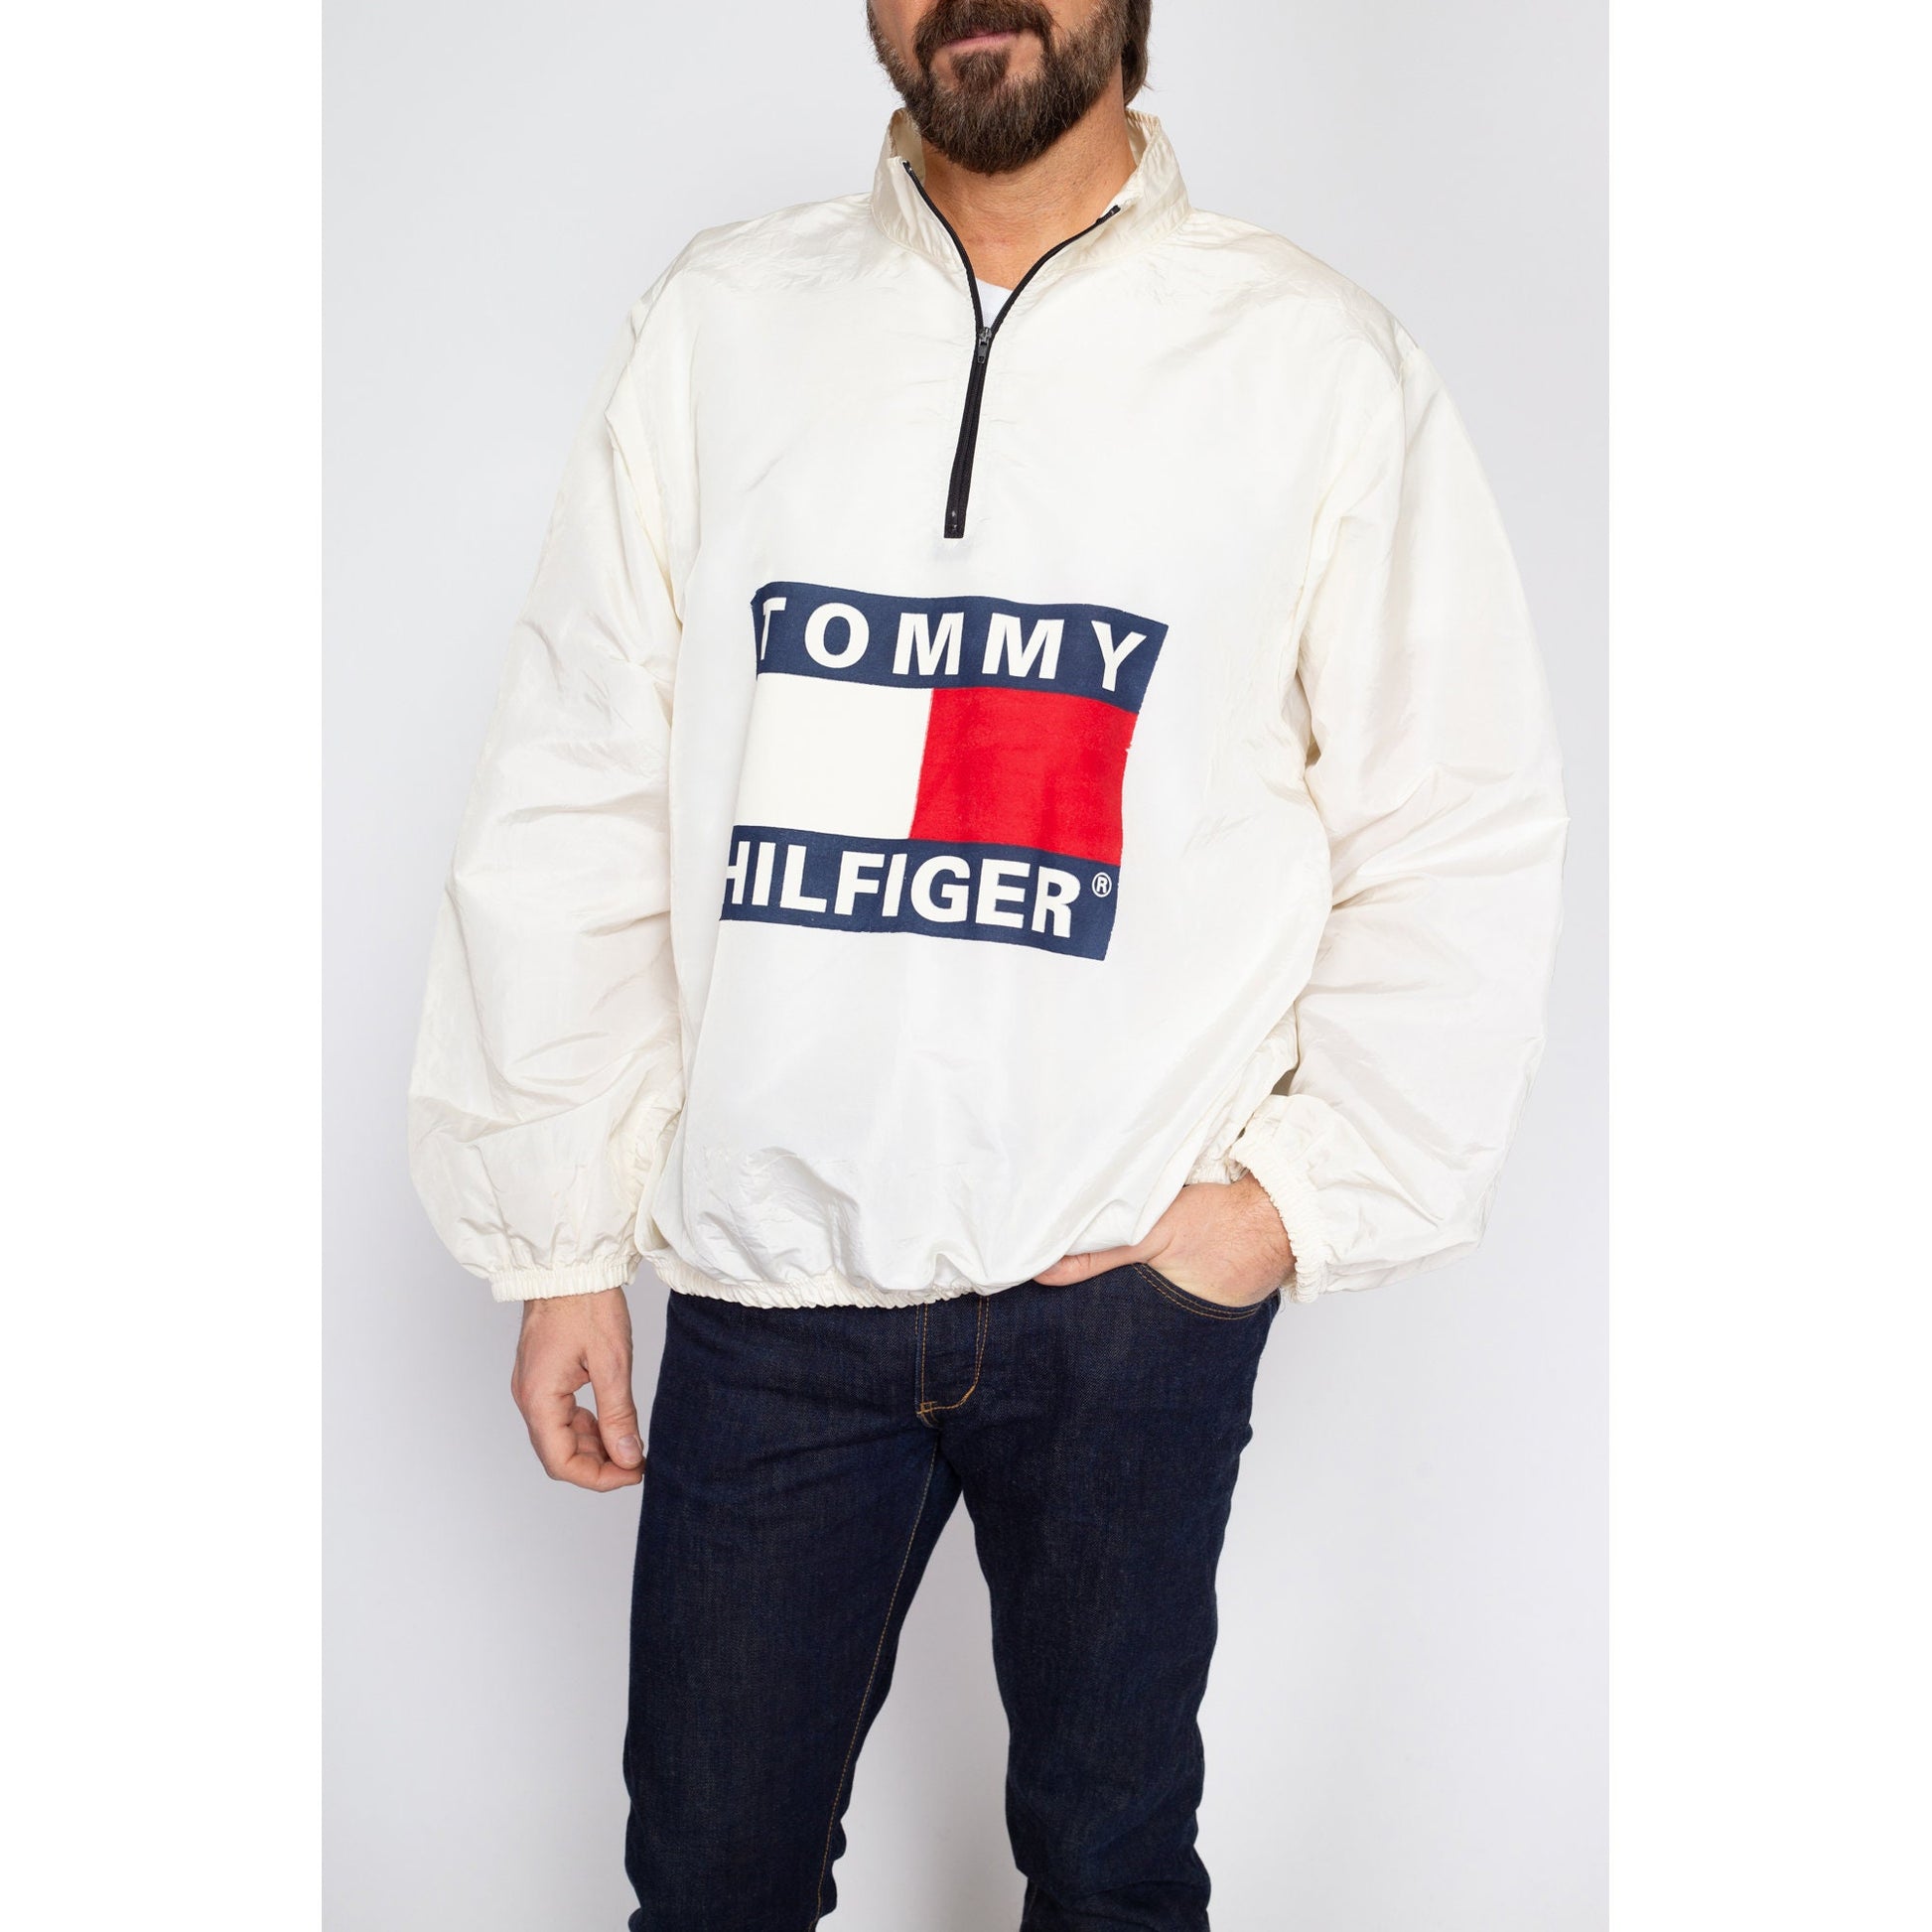 TOMMY HILFIGER Essential Sweatshirt for Girls - TOMMY - Citysport